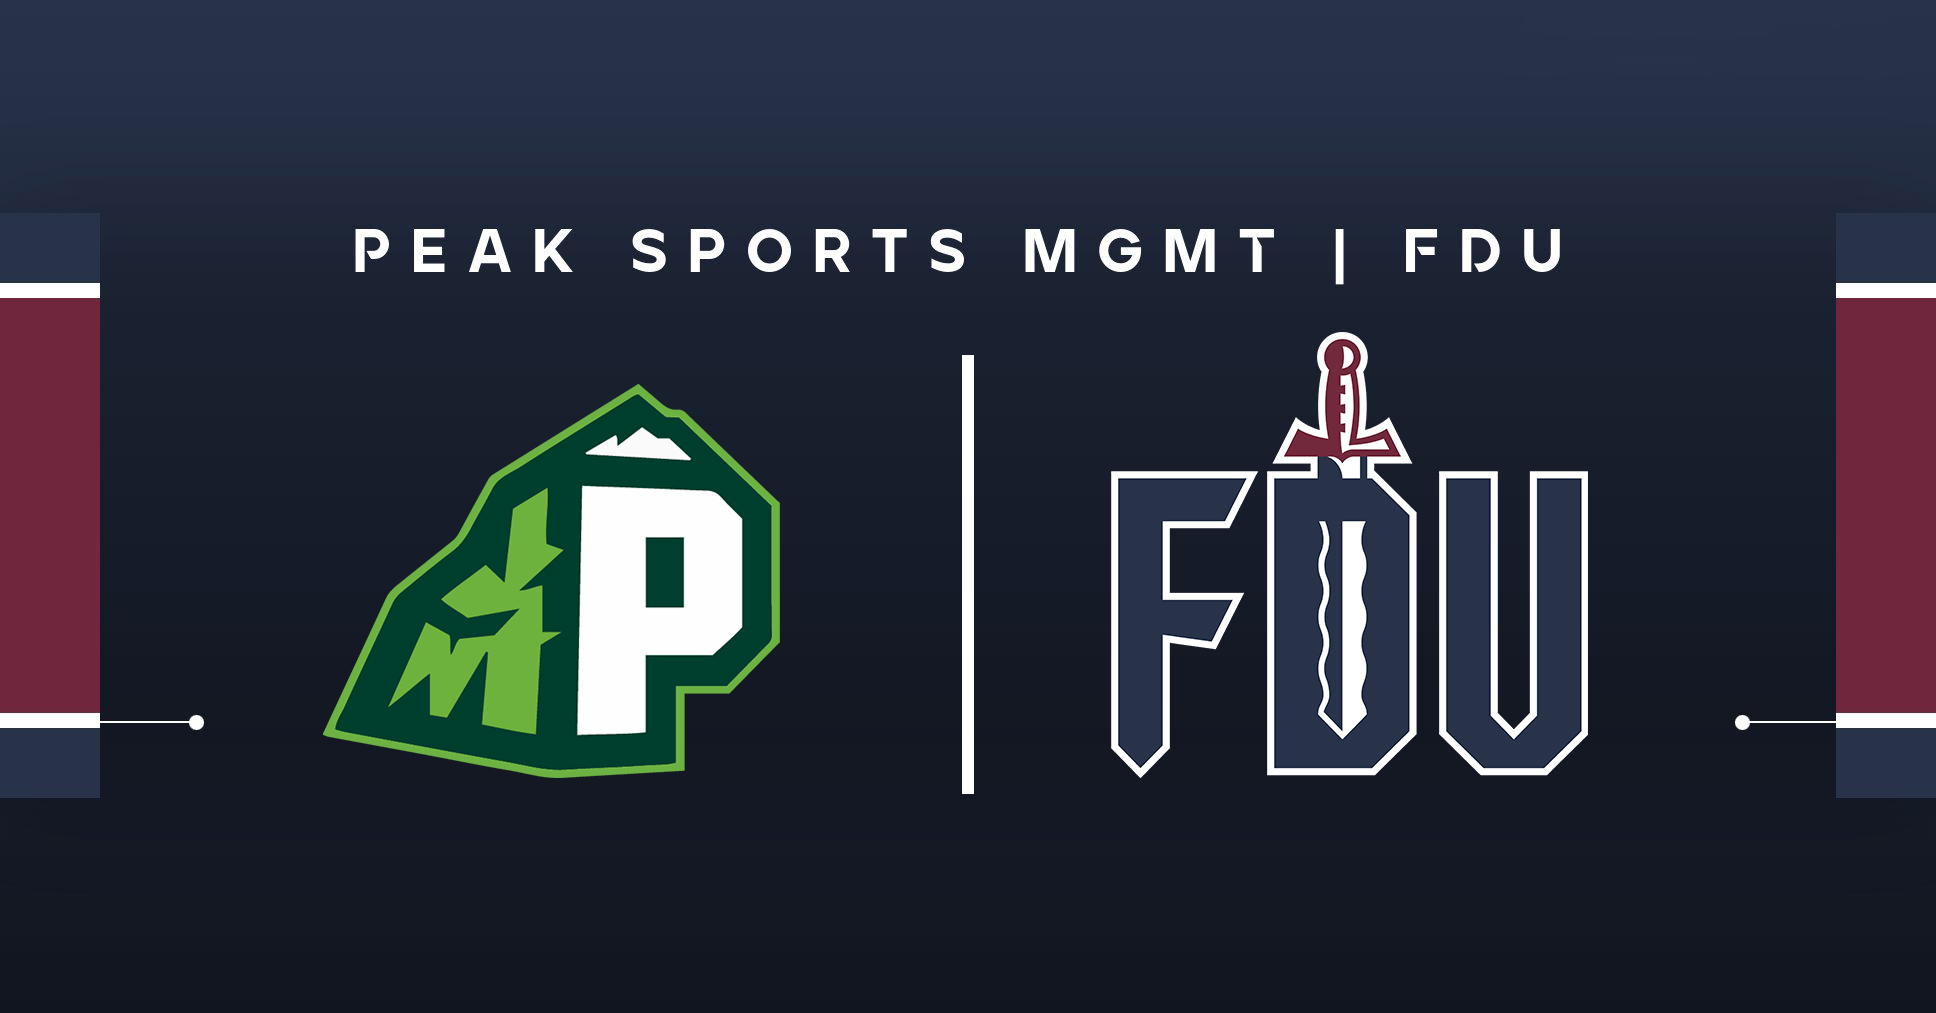 FDU Athletics Announce Partnership with Peak Sports MGMT